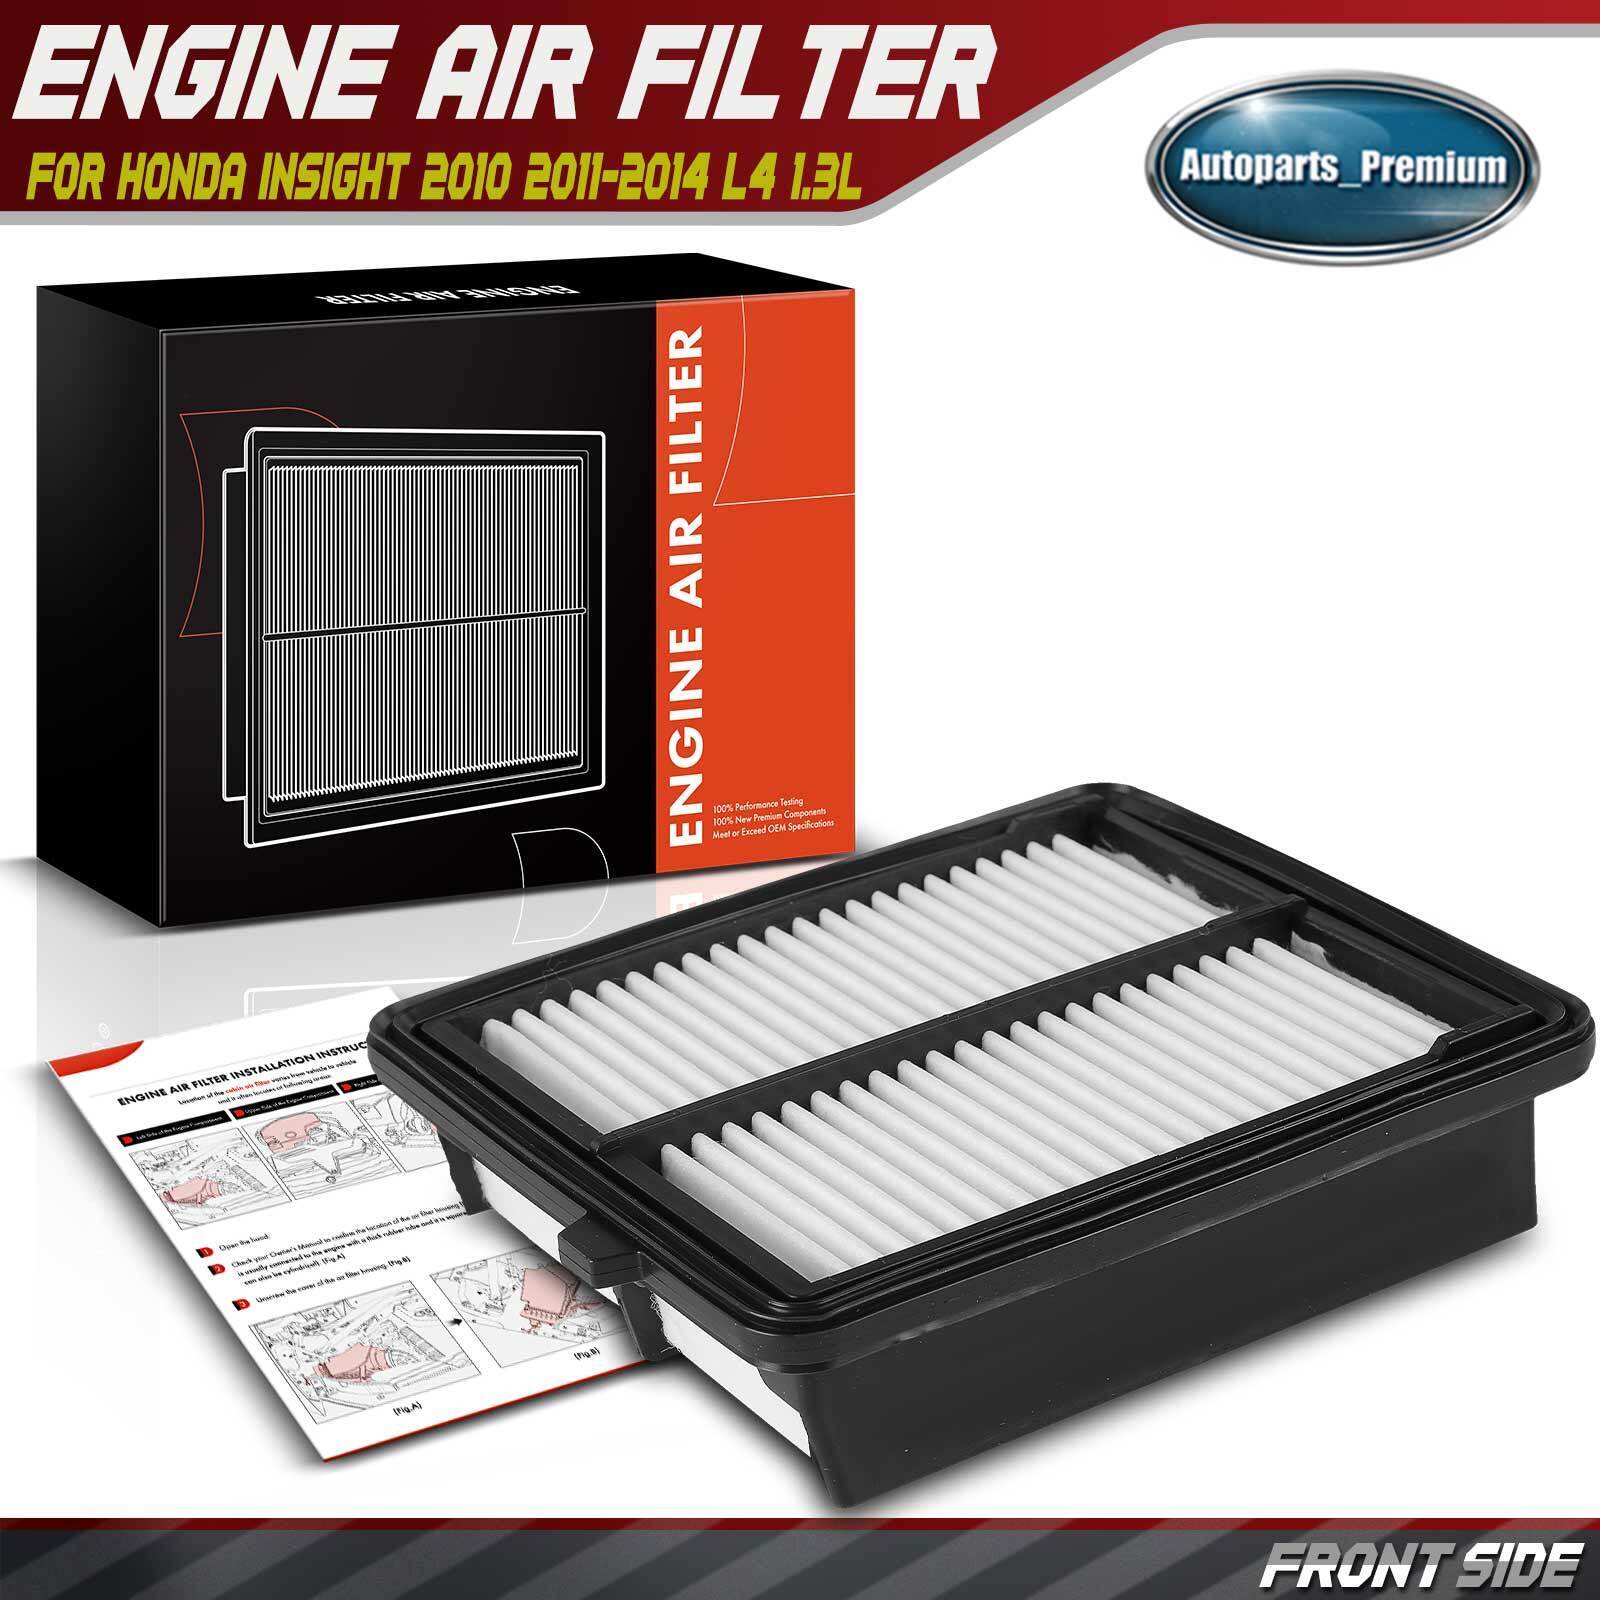 New Engine Air Filter for Honda Insight 2010 2011 2012 2013-2014 L4 1.3L Rigid